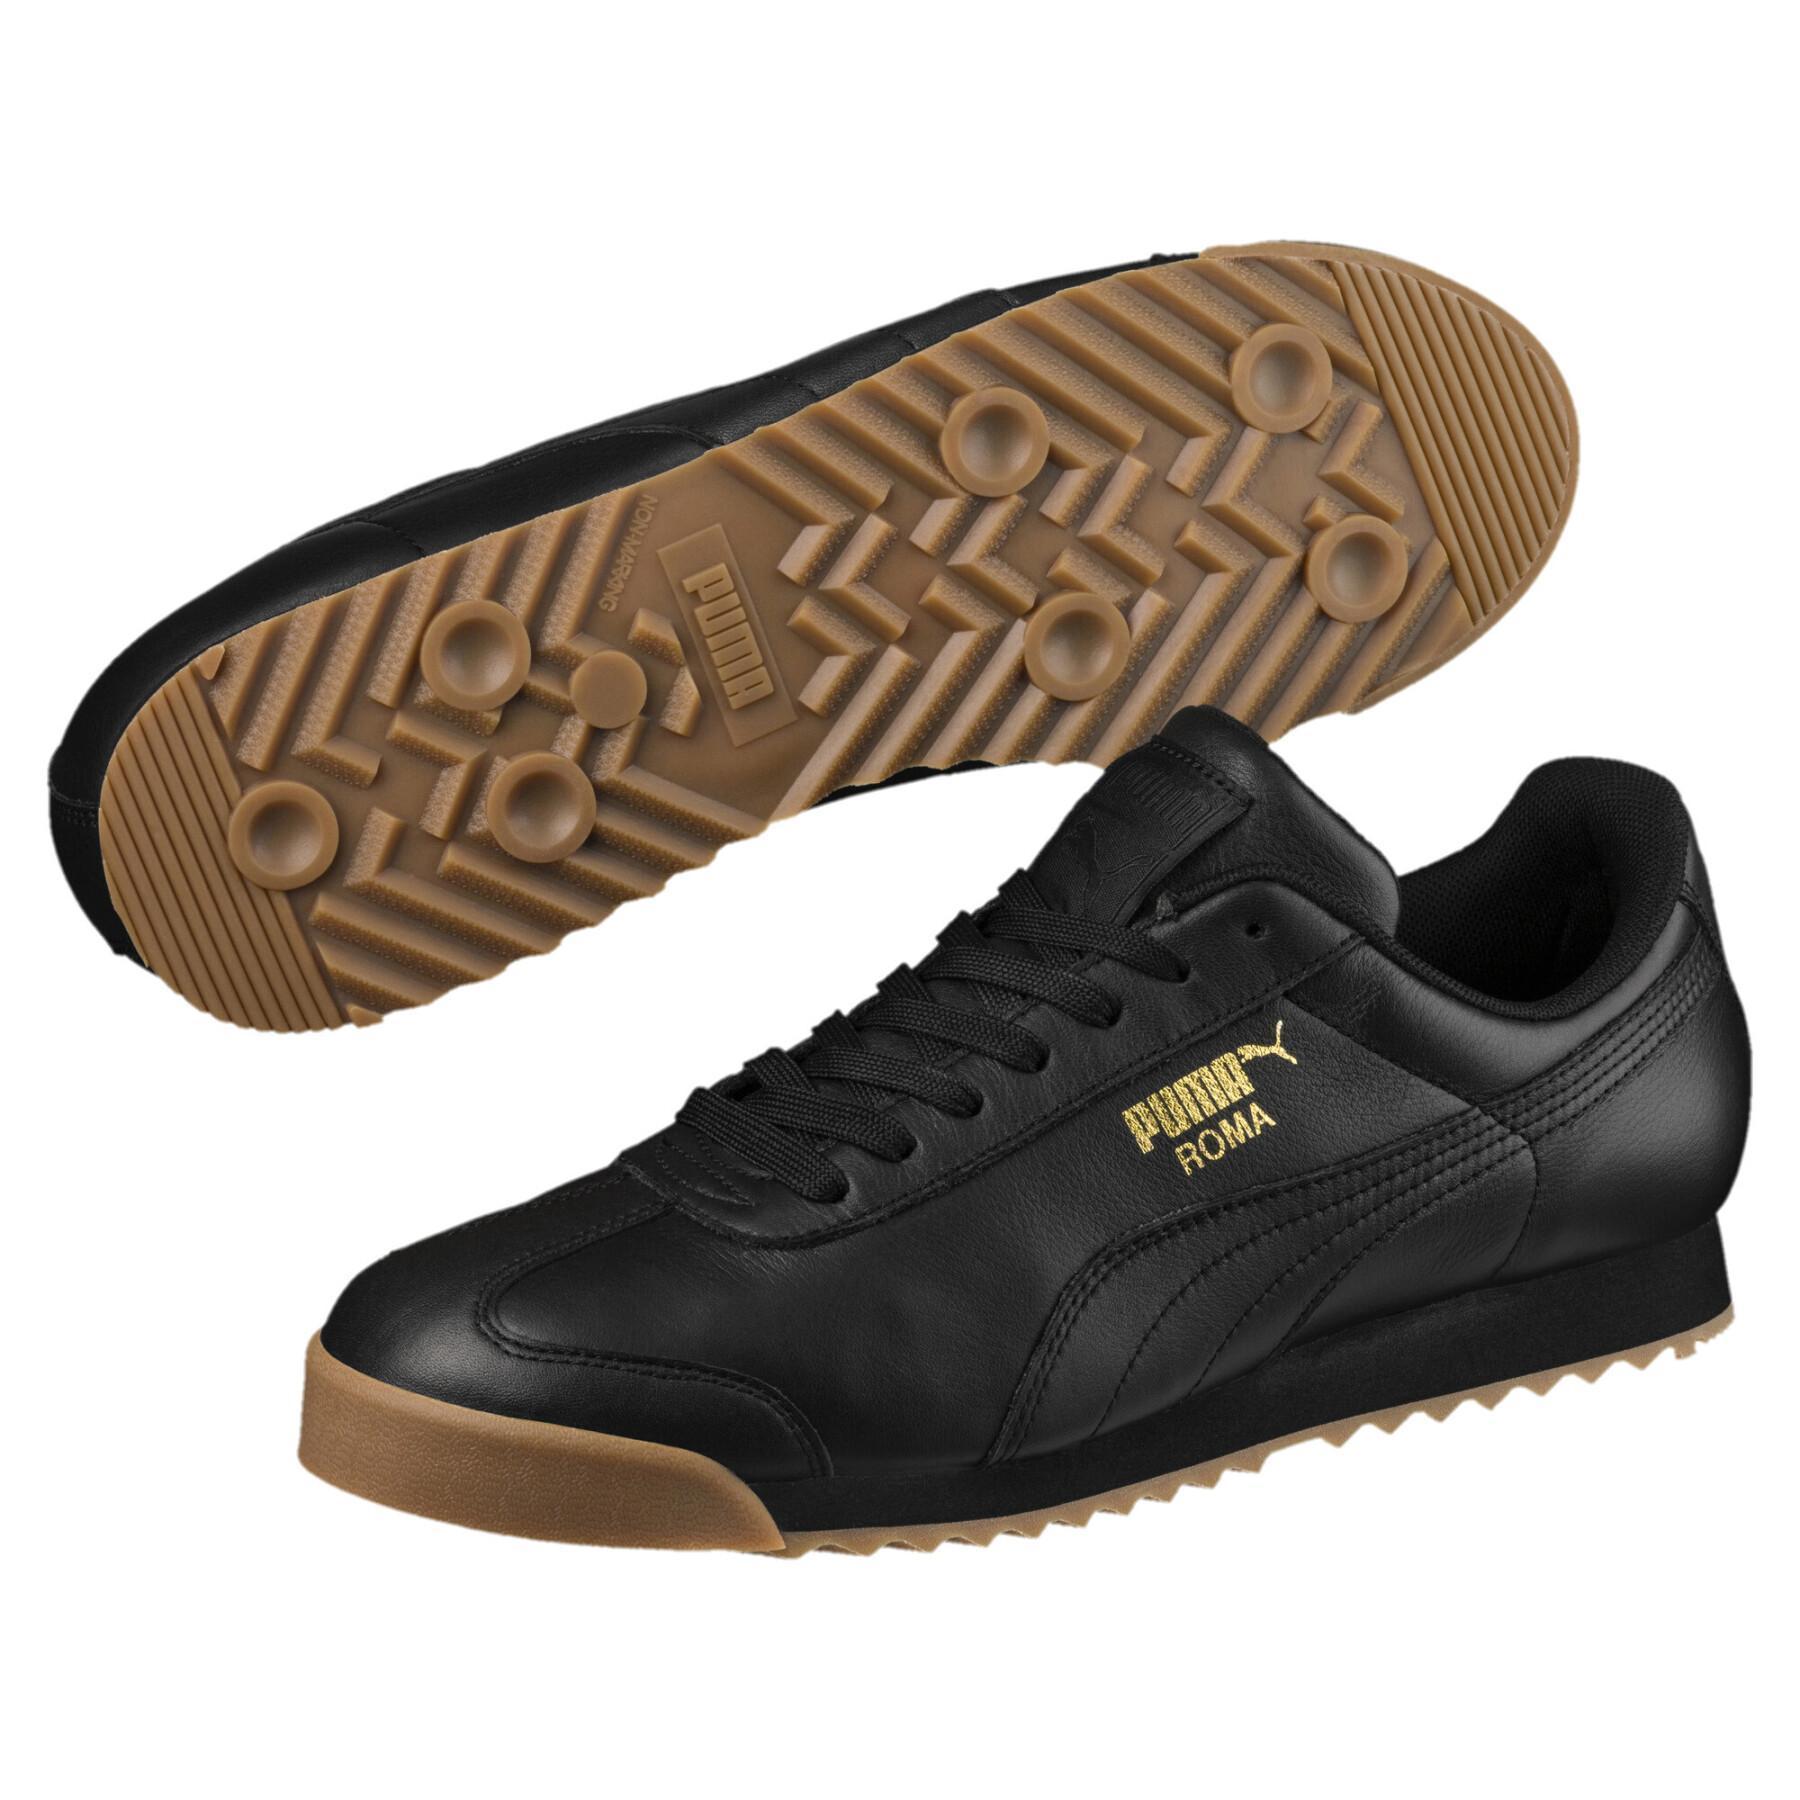 Sneakers Puma Roma Classic Gum - Puma - Brands - Lifestyle